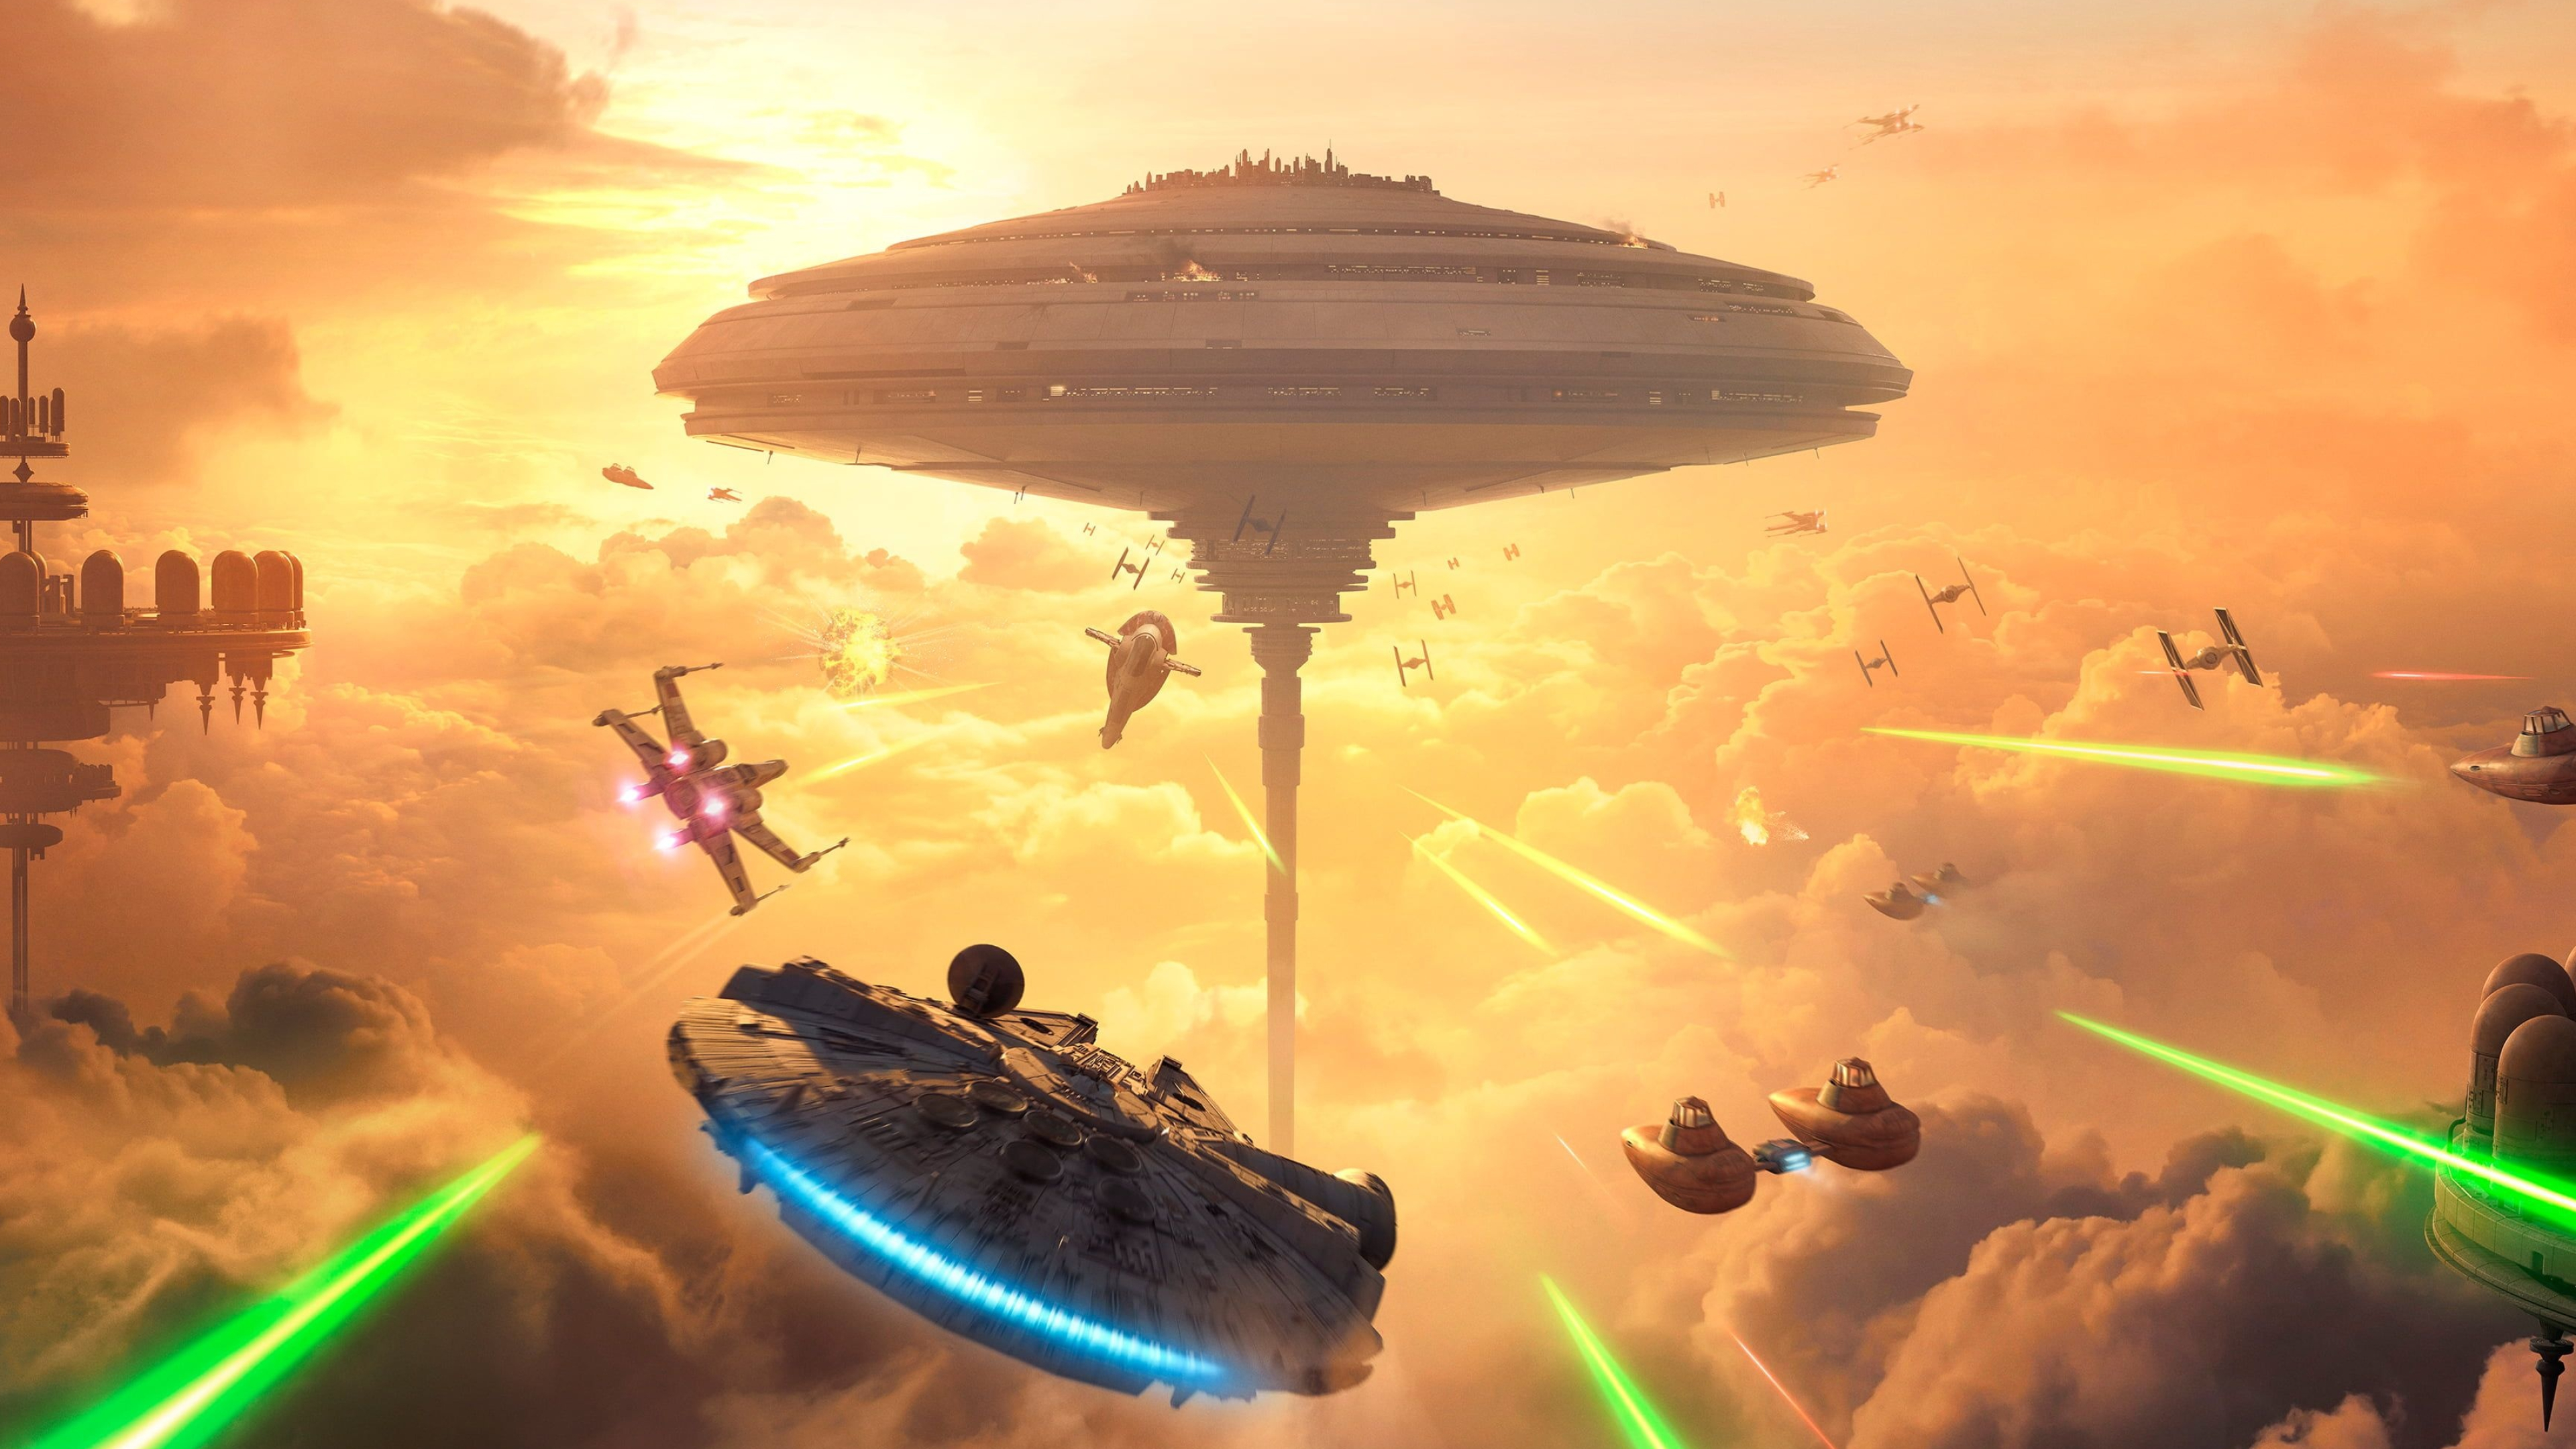 Millennium Falcon above Cloud City, Scenic wallpaper, Star Wars spaceship, HD image, 3840x2160 4K Desktop